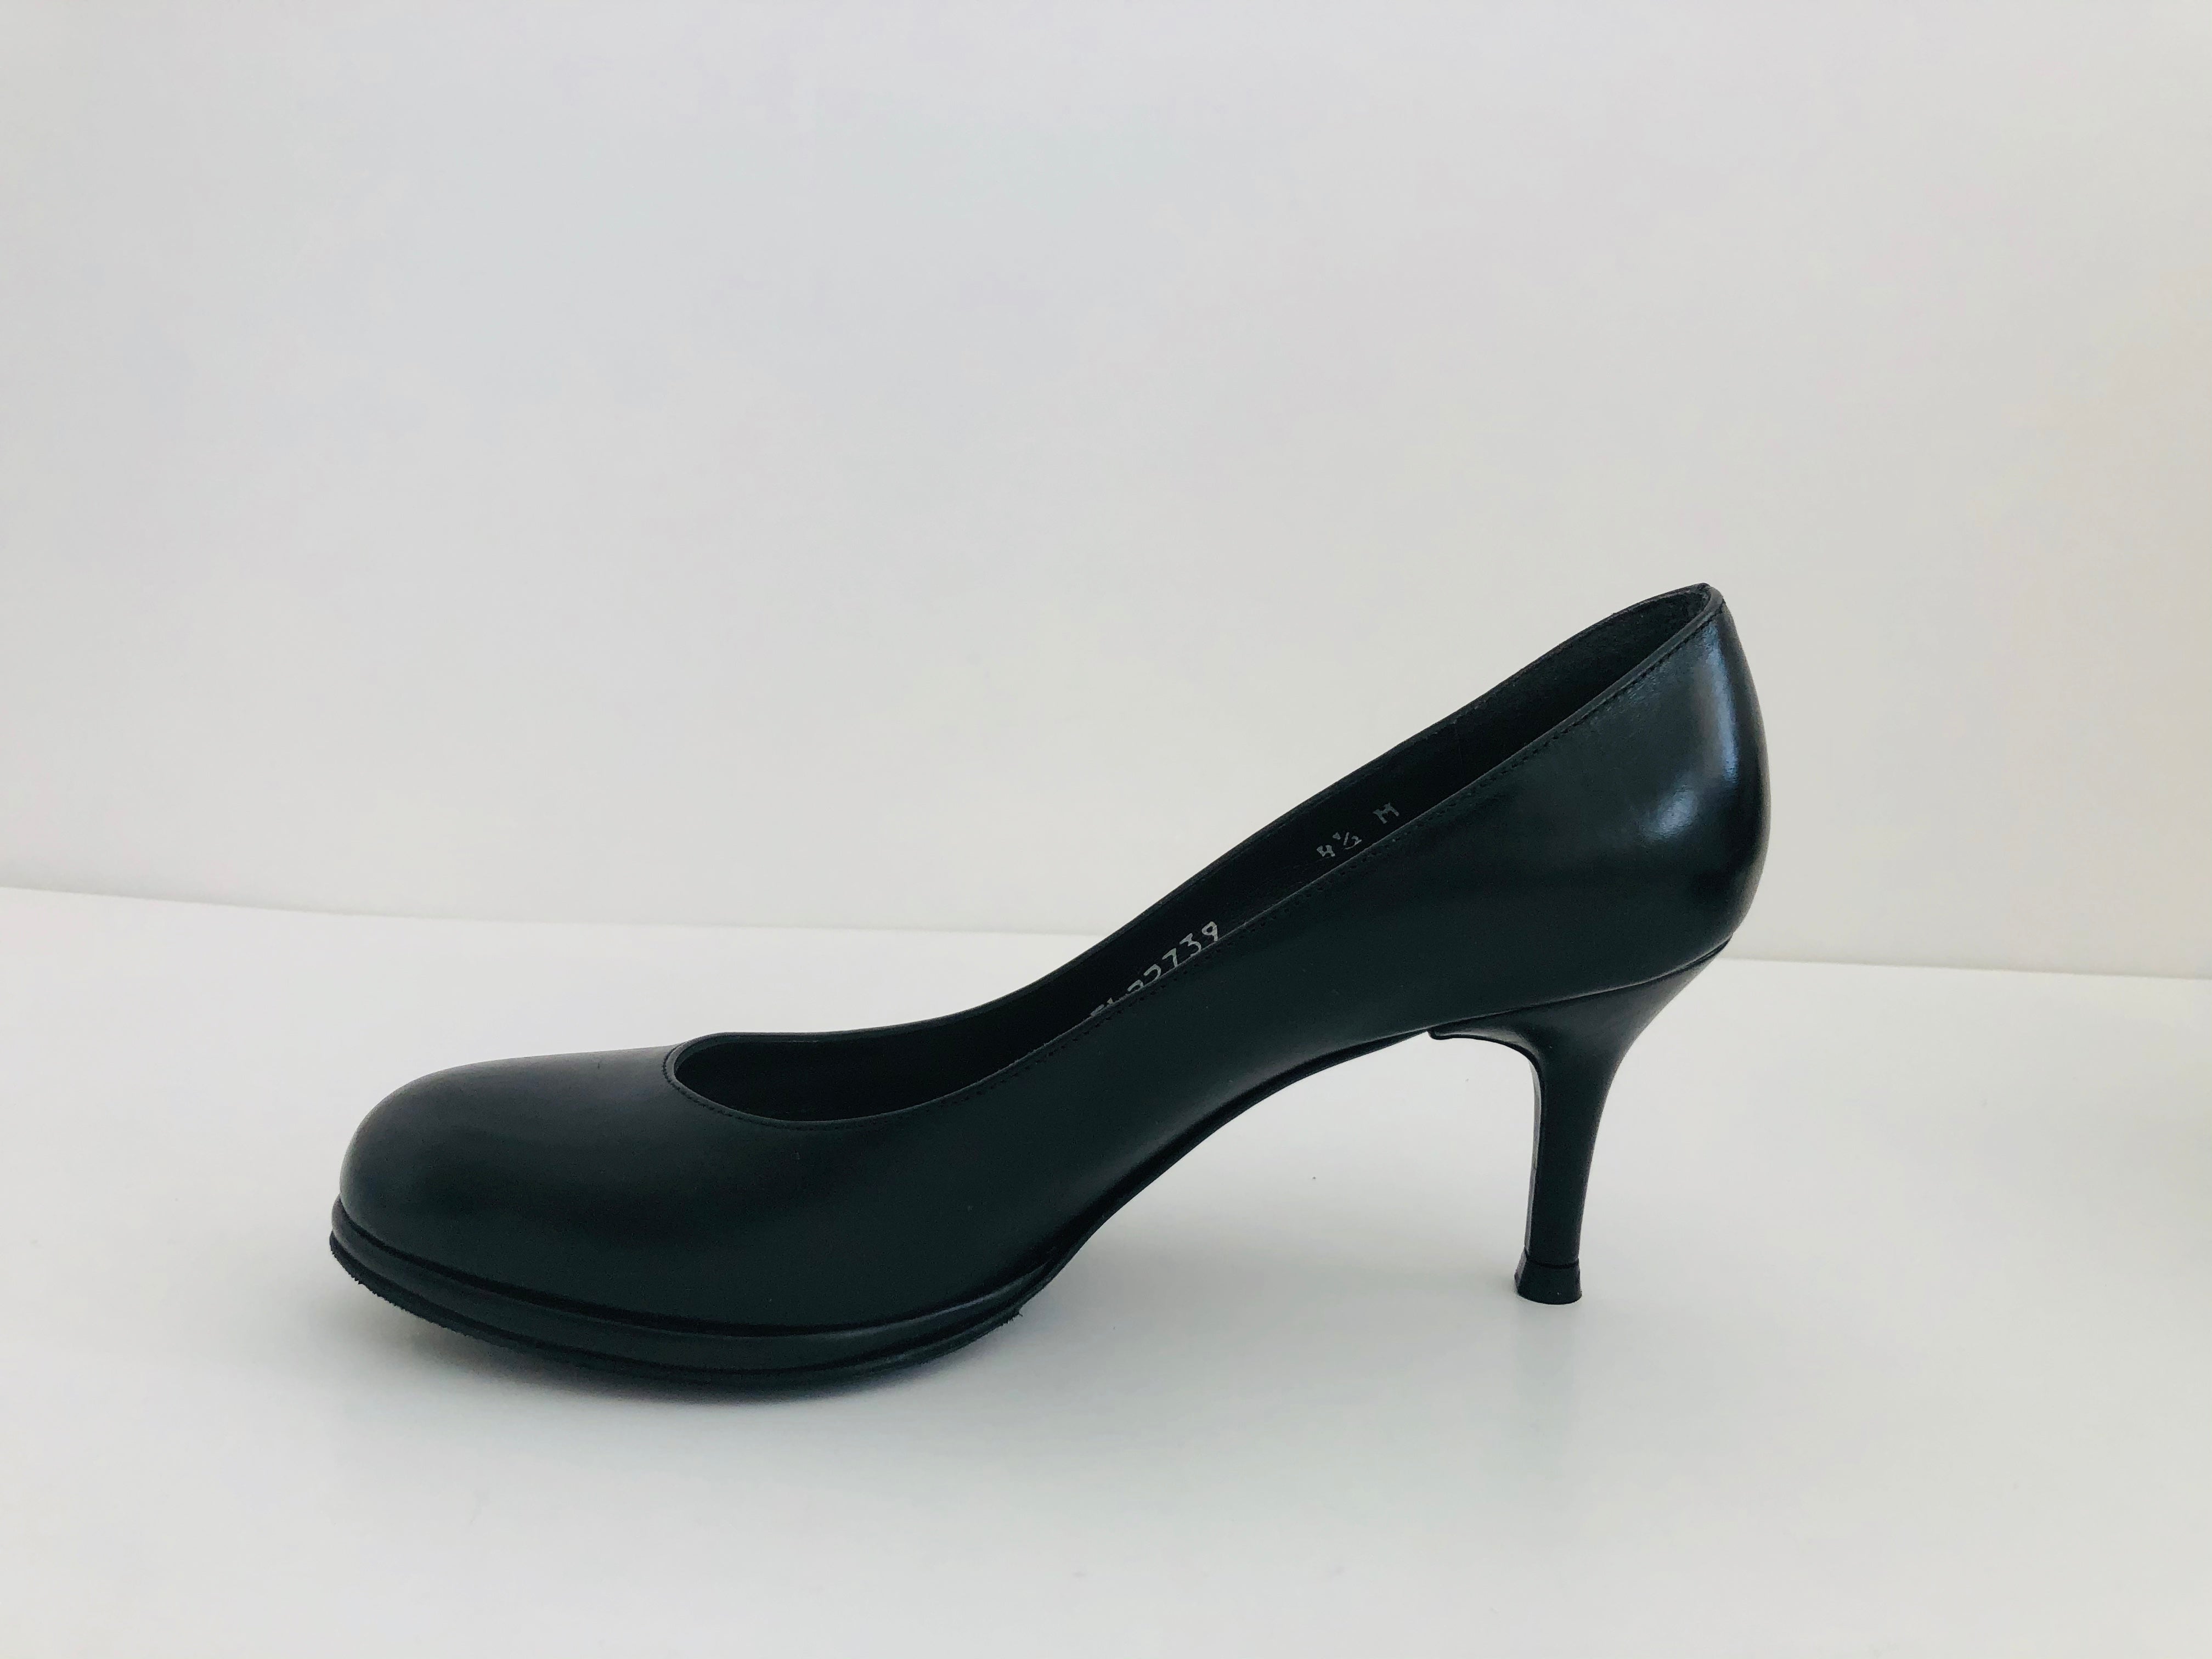 size 4.5 black heels